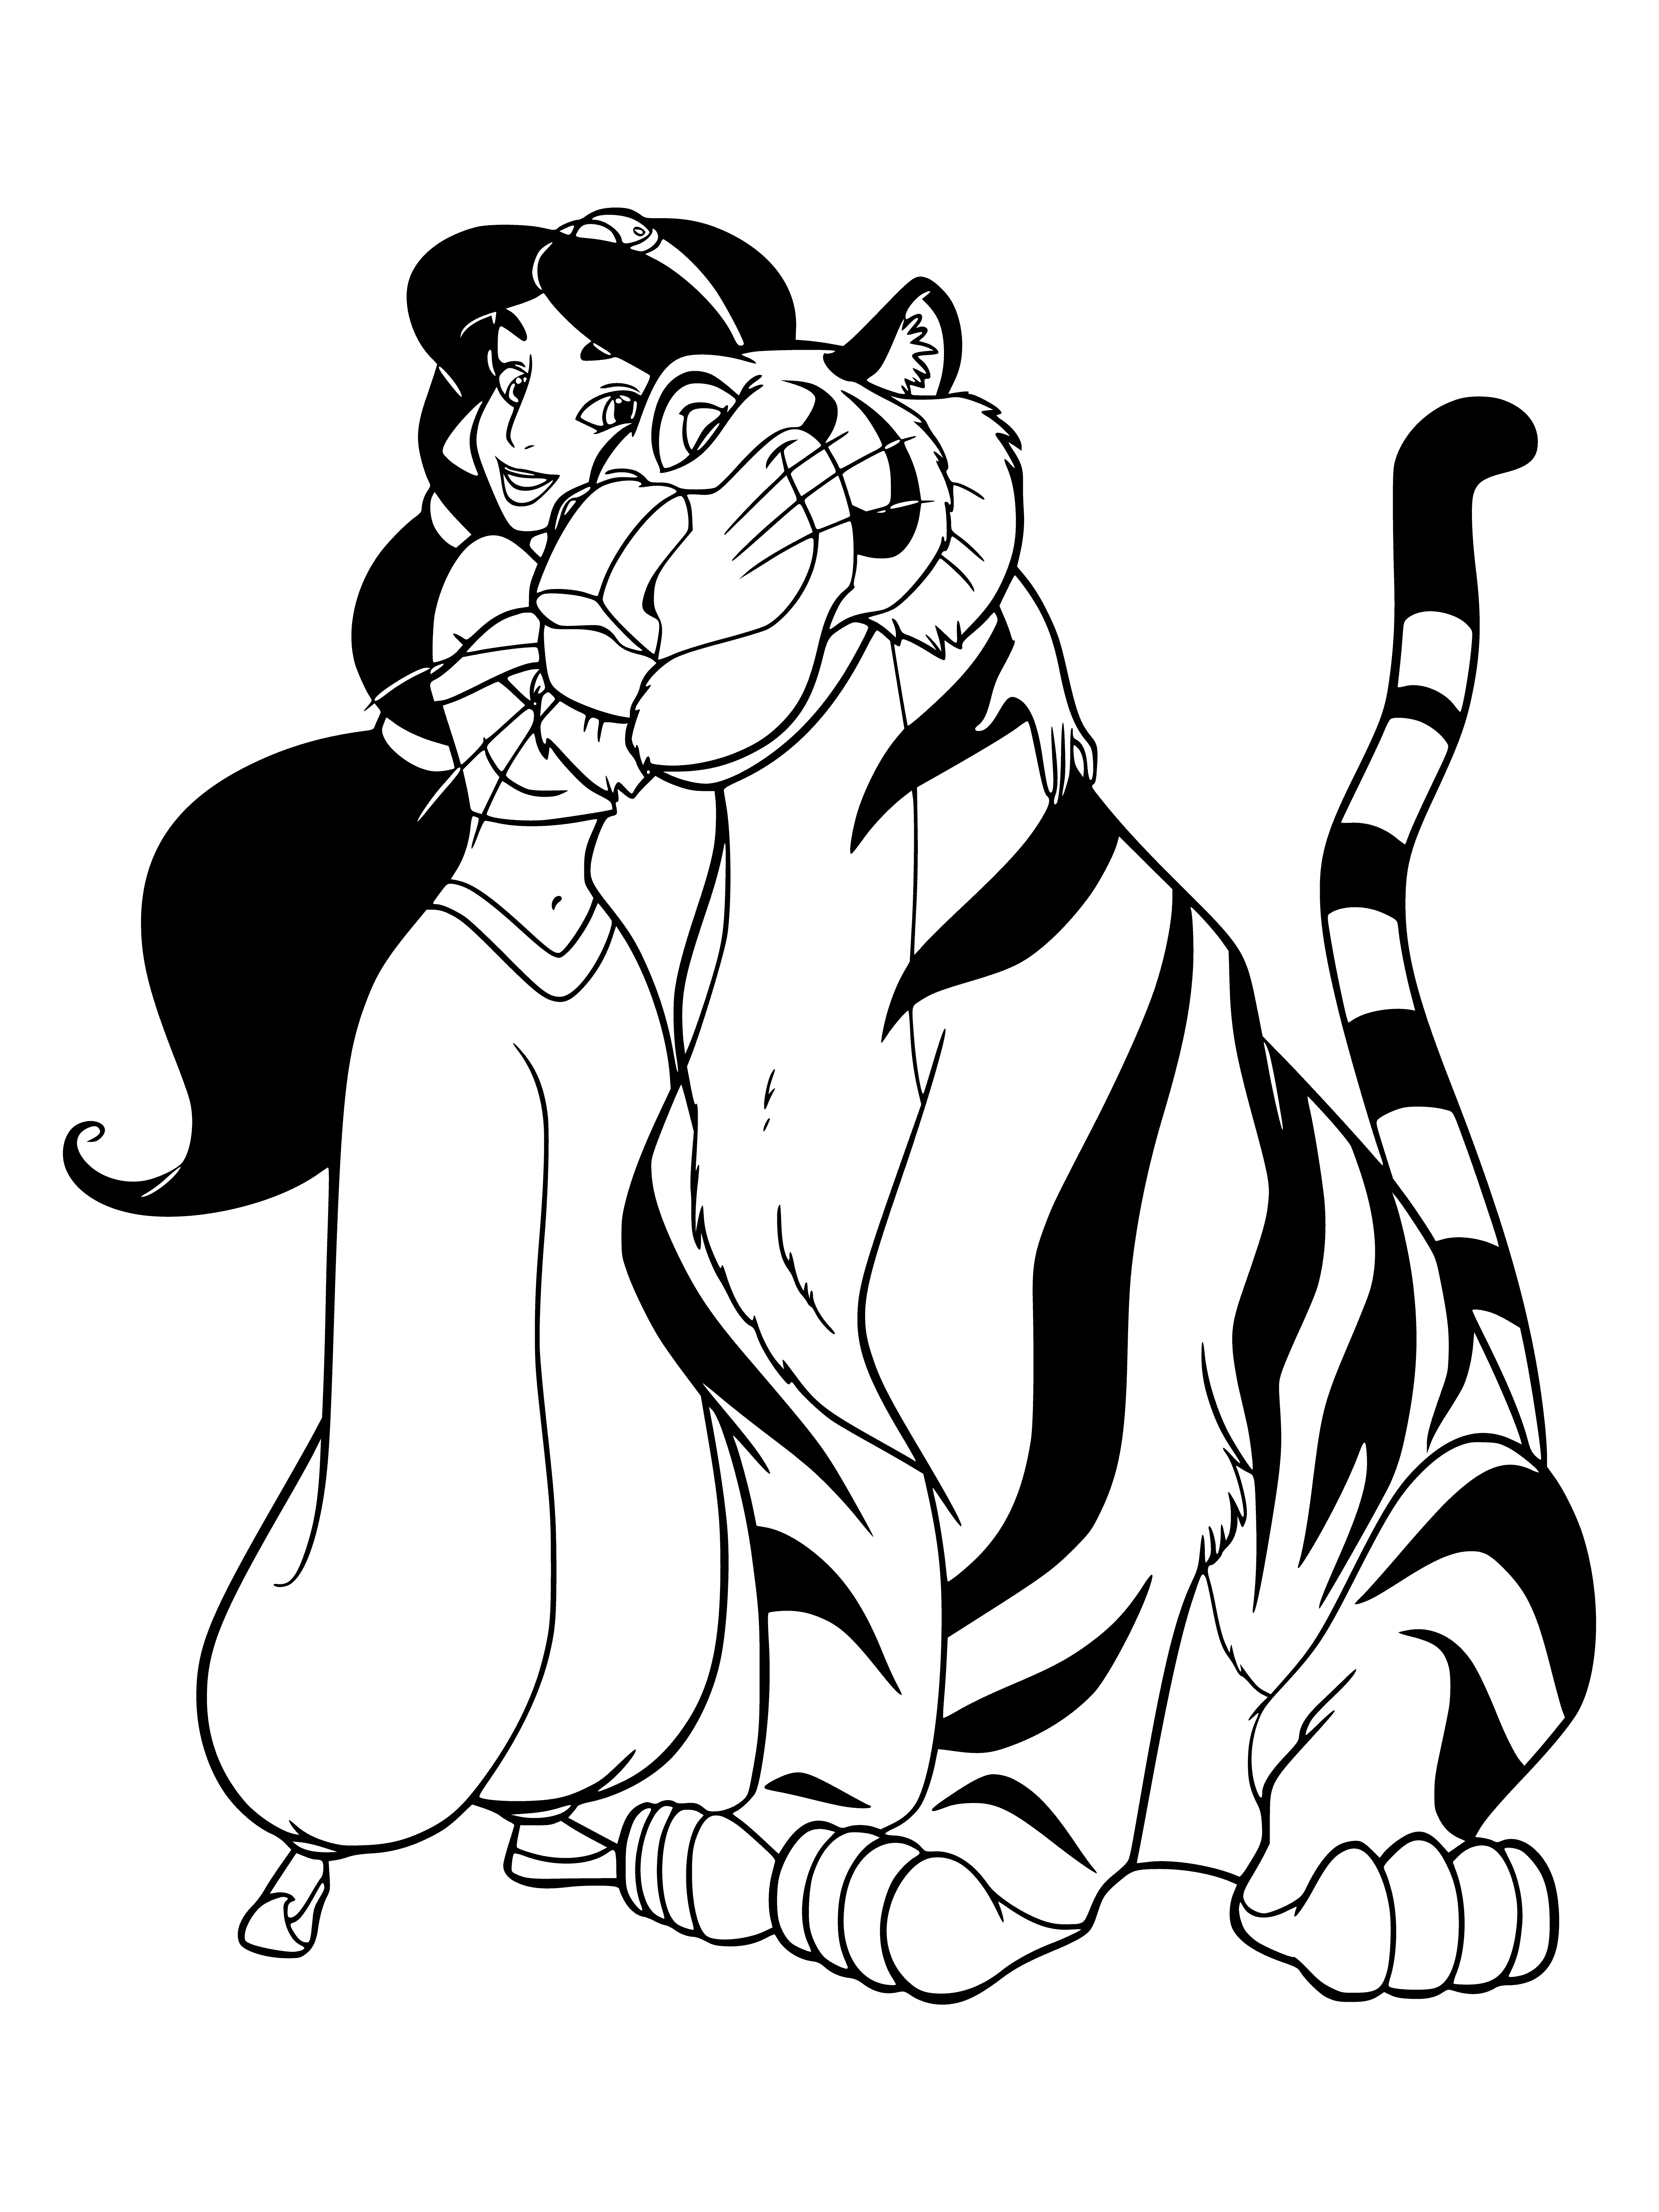 Princess Jasmine and Raja the Tiger coloring page